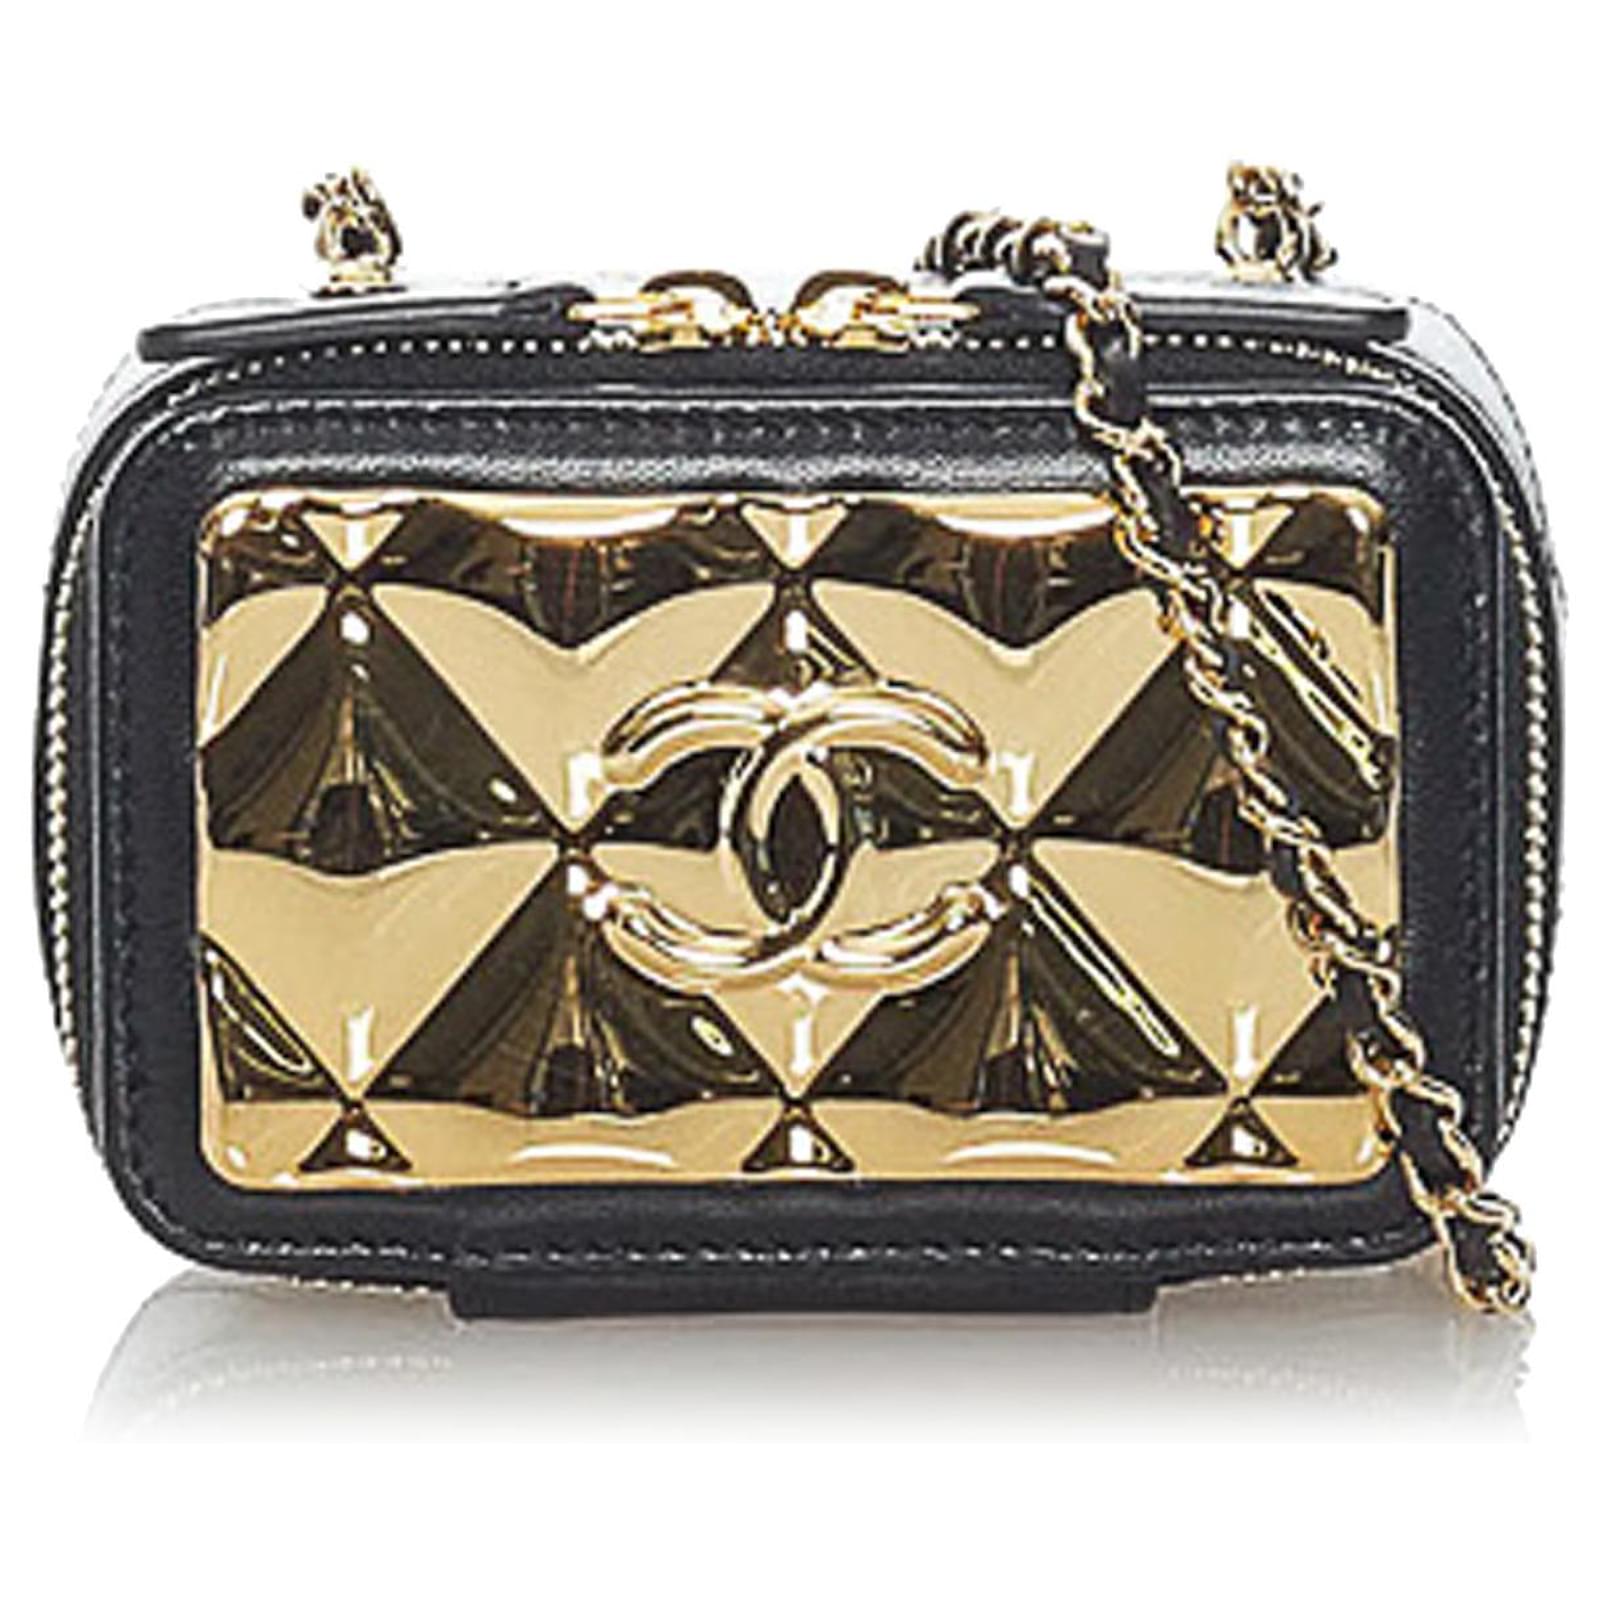 Chanel Flap Card Holder Wallet Blue Lambskin Light Gold Hardware